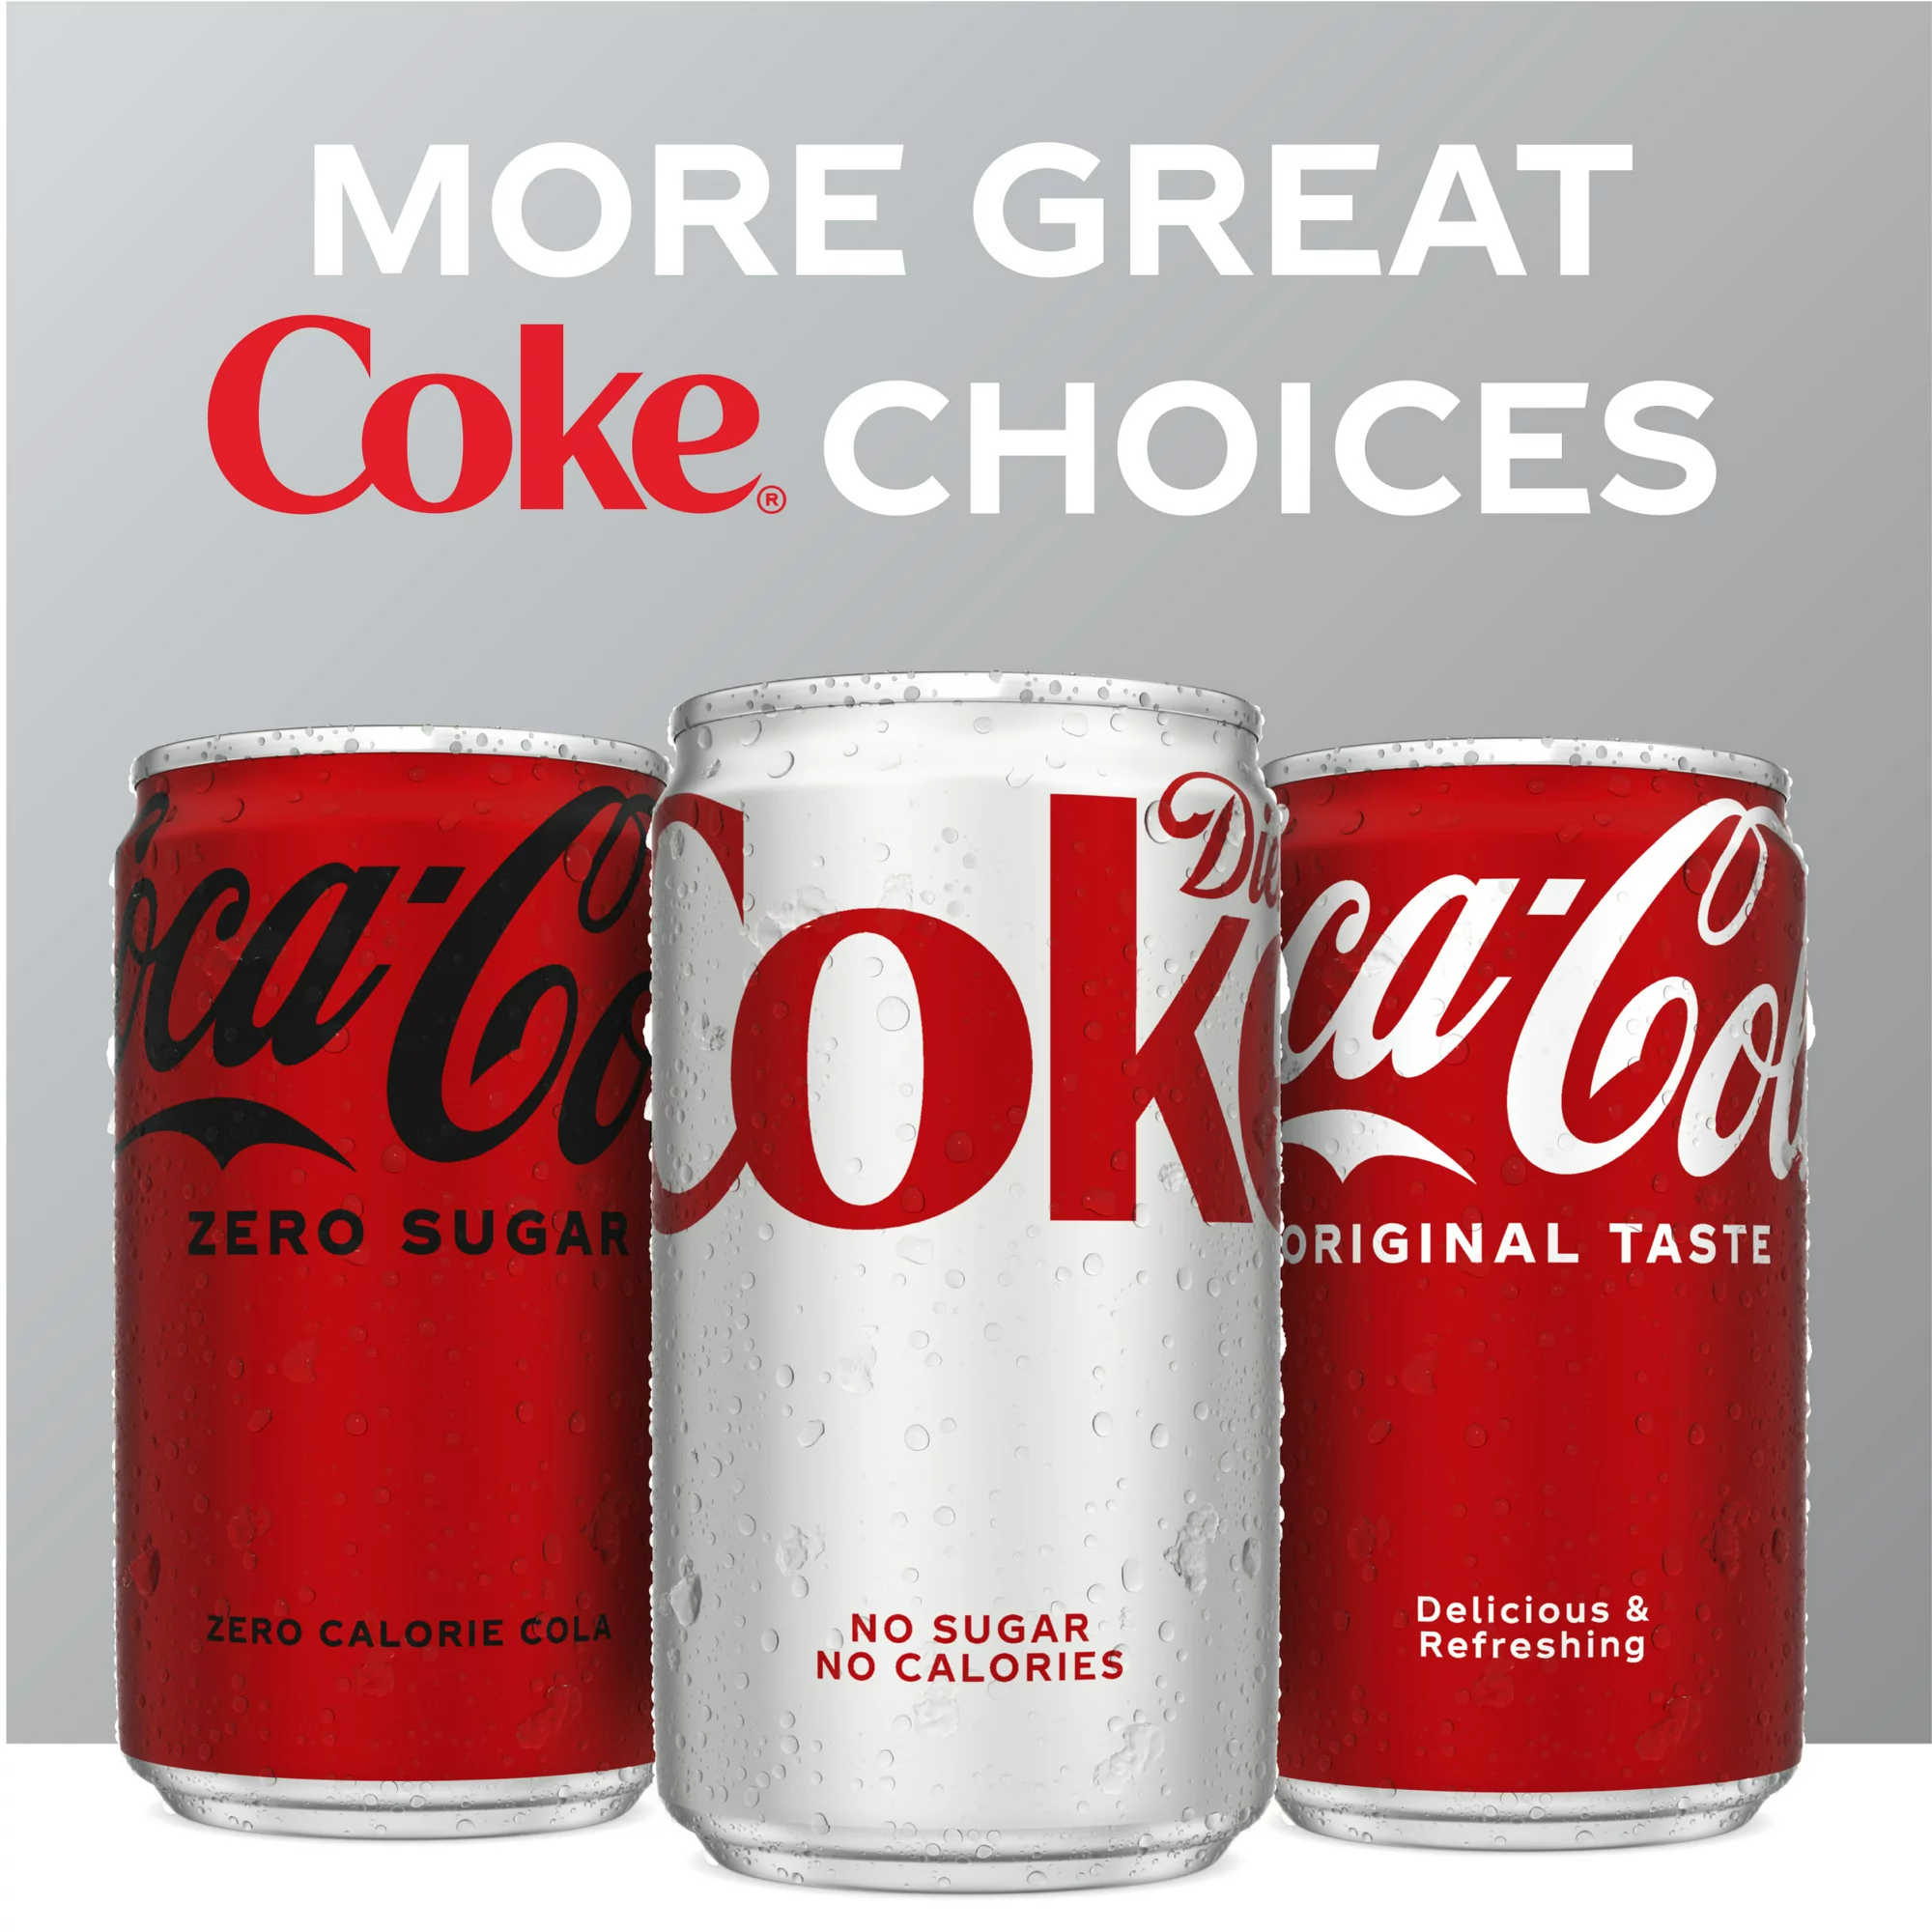 Coca-Cola Mini Soda Soft Drink Coke, 7.5 fl oz, 10 Pack